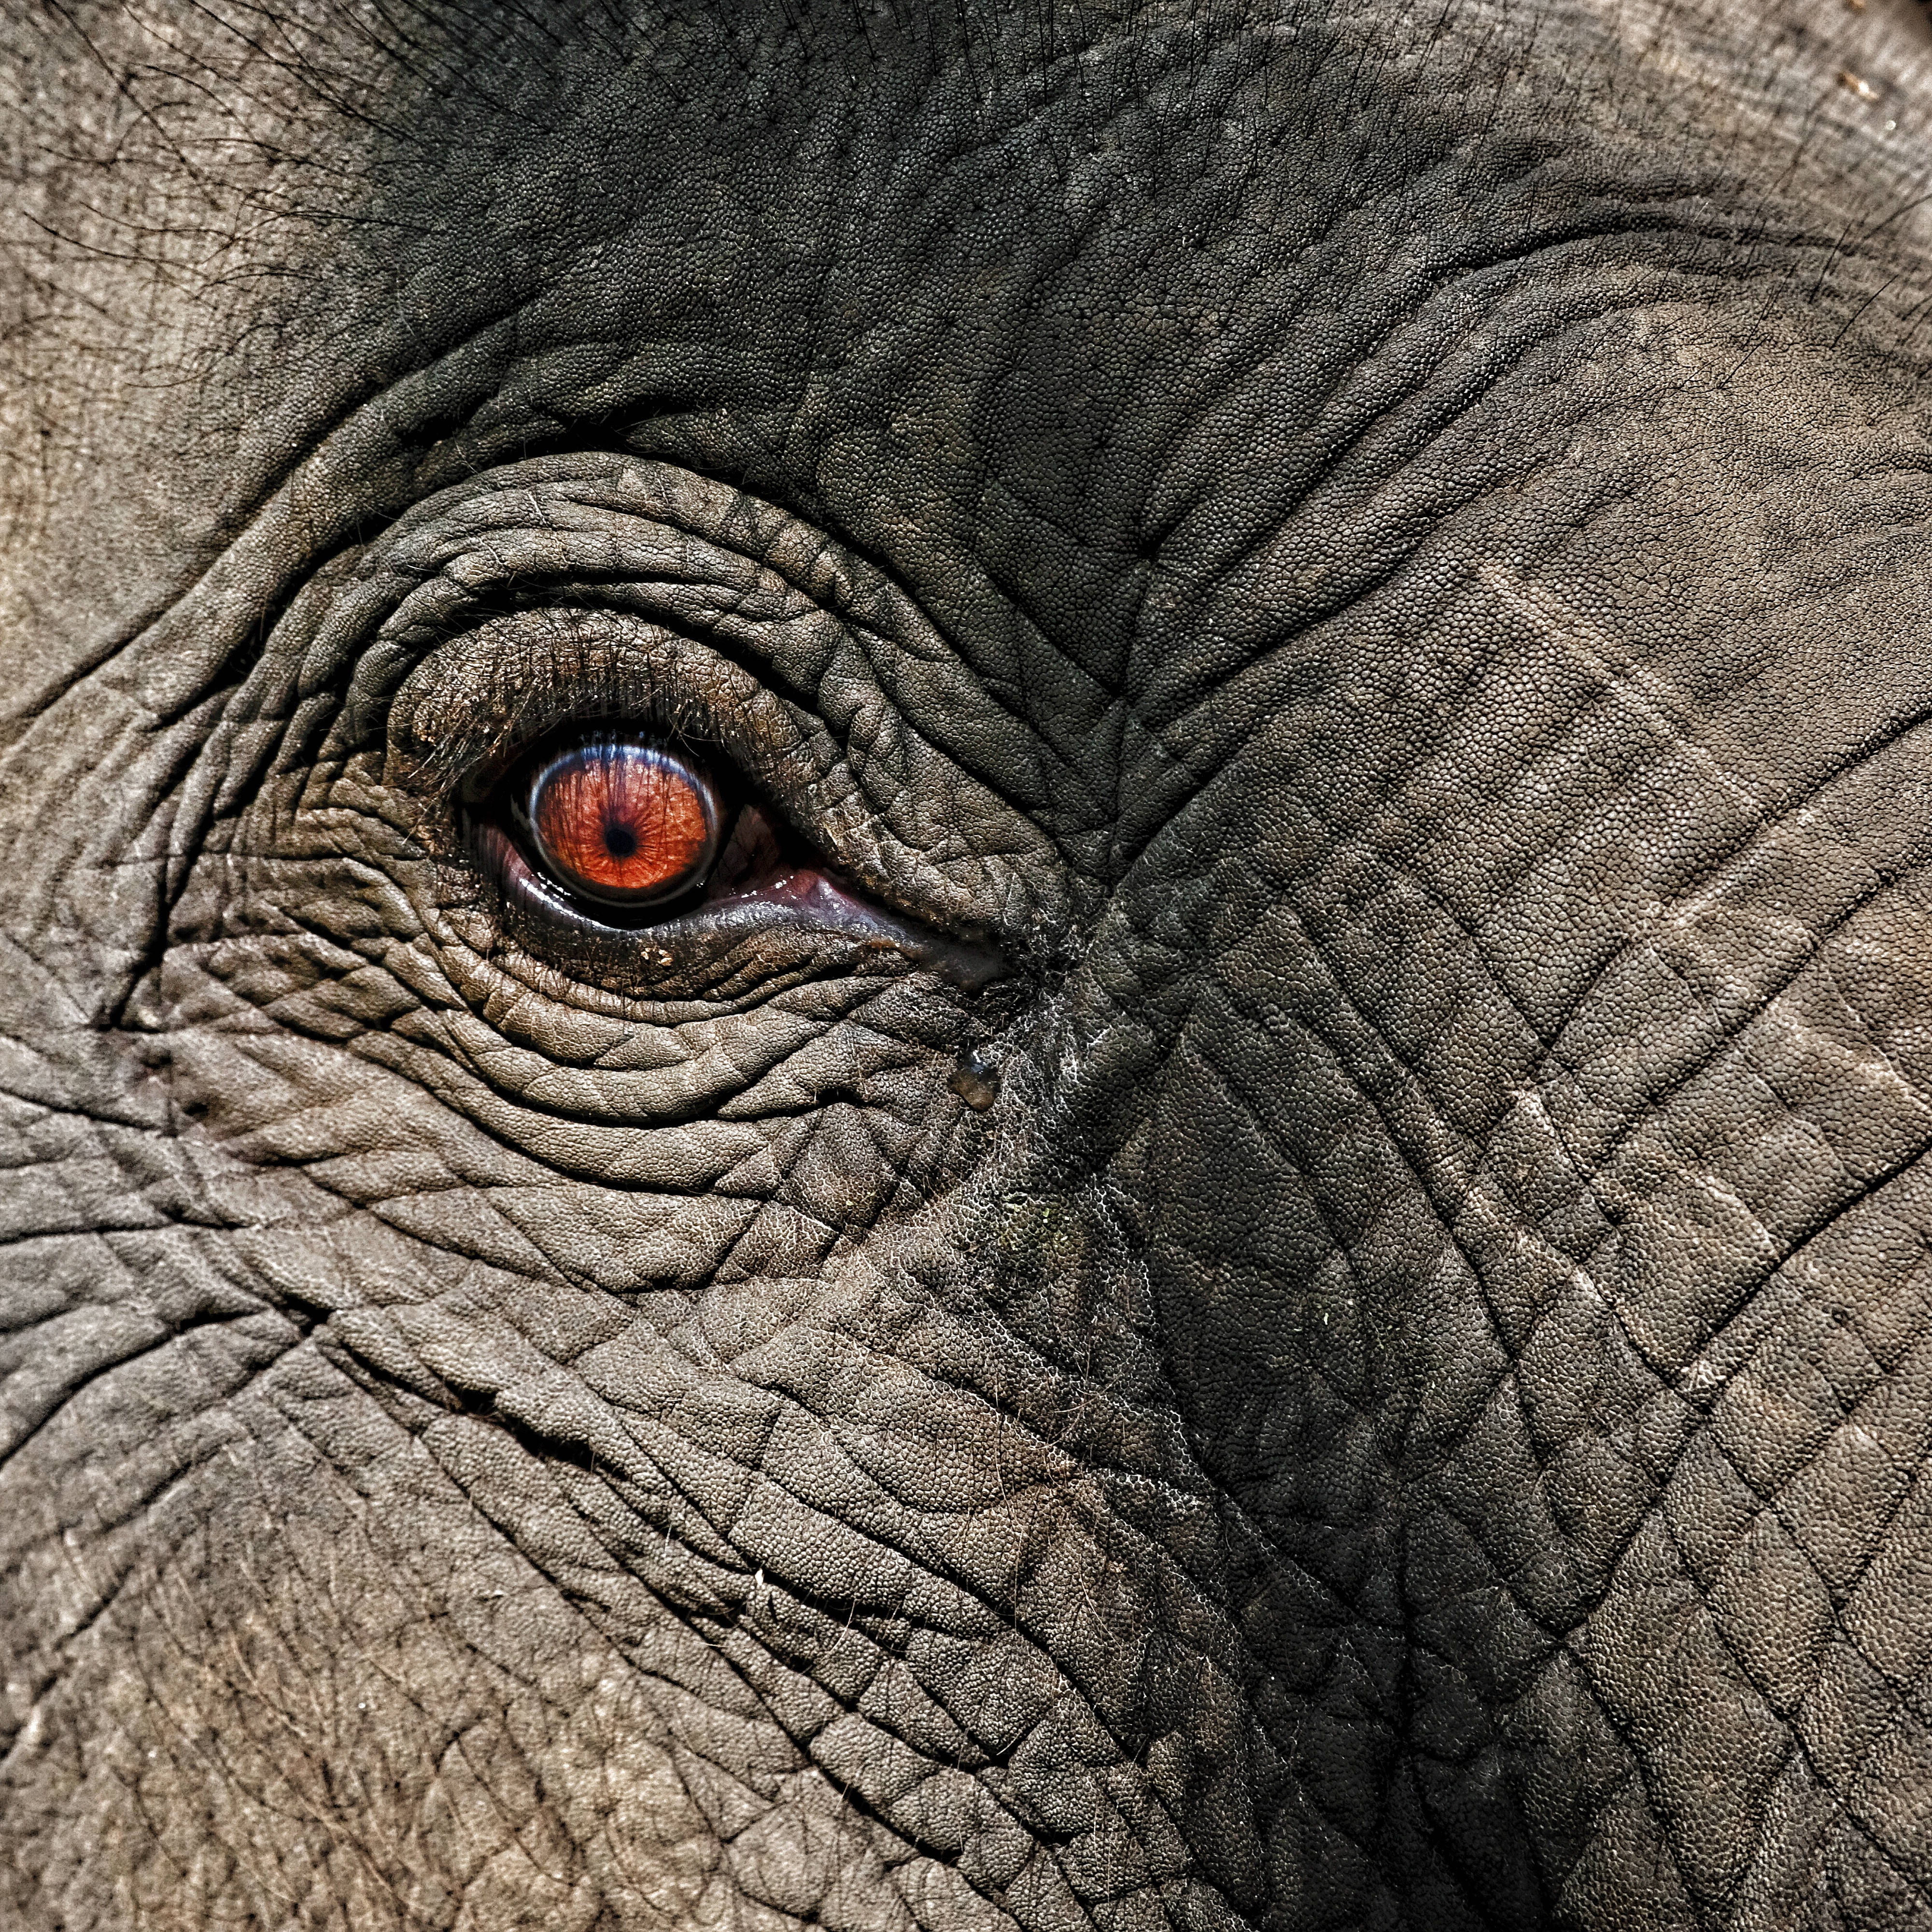 4k Elephant Eye Background